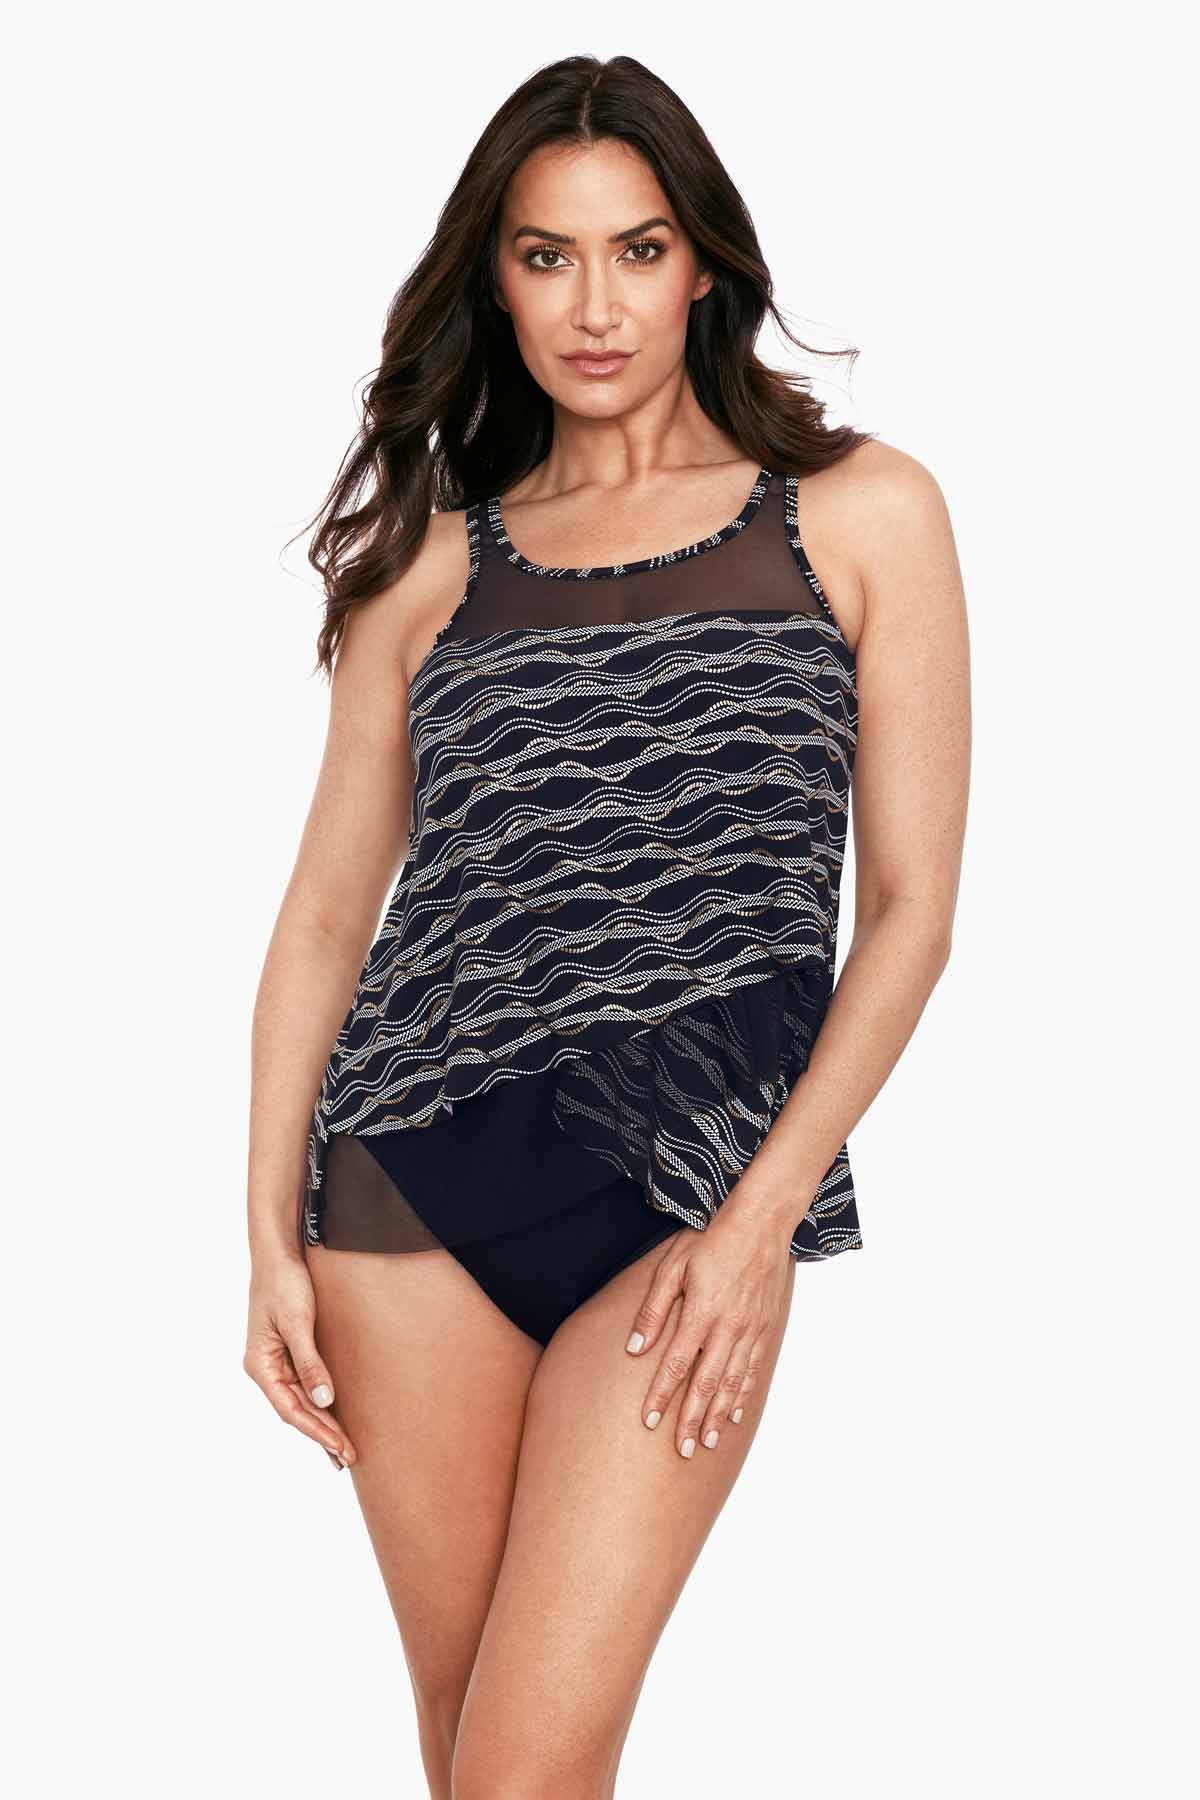 Swimsuits for All Women's Plus Size Bra Sized Faux Flyaway Underwire  Tankini Top, 42 DD - Black